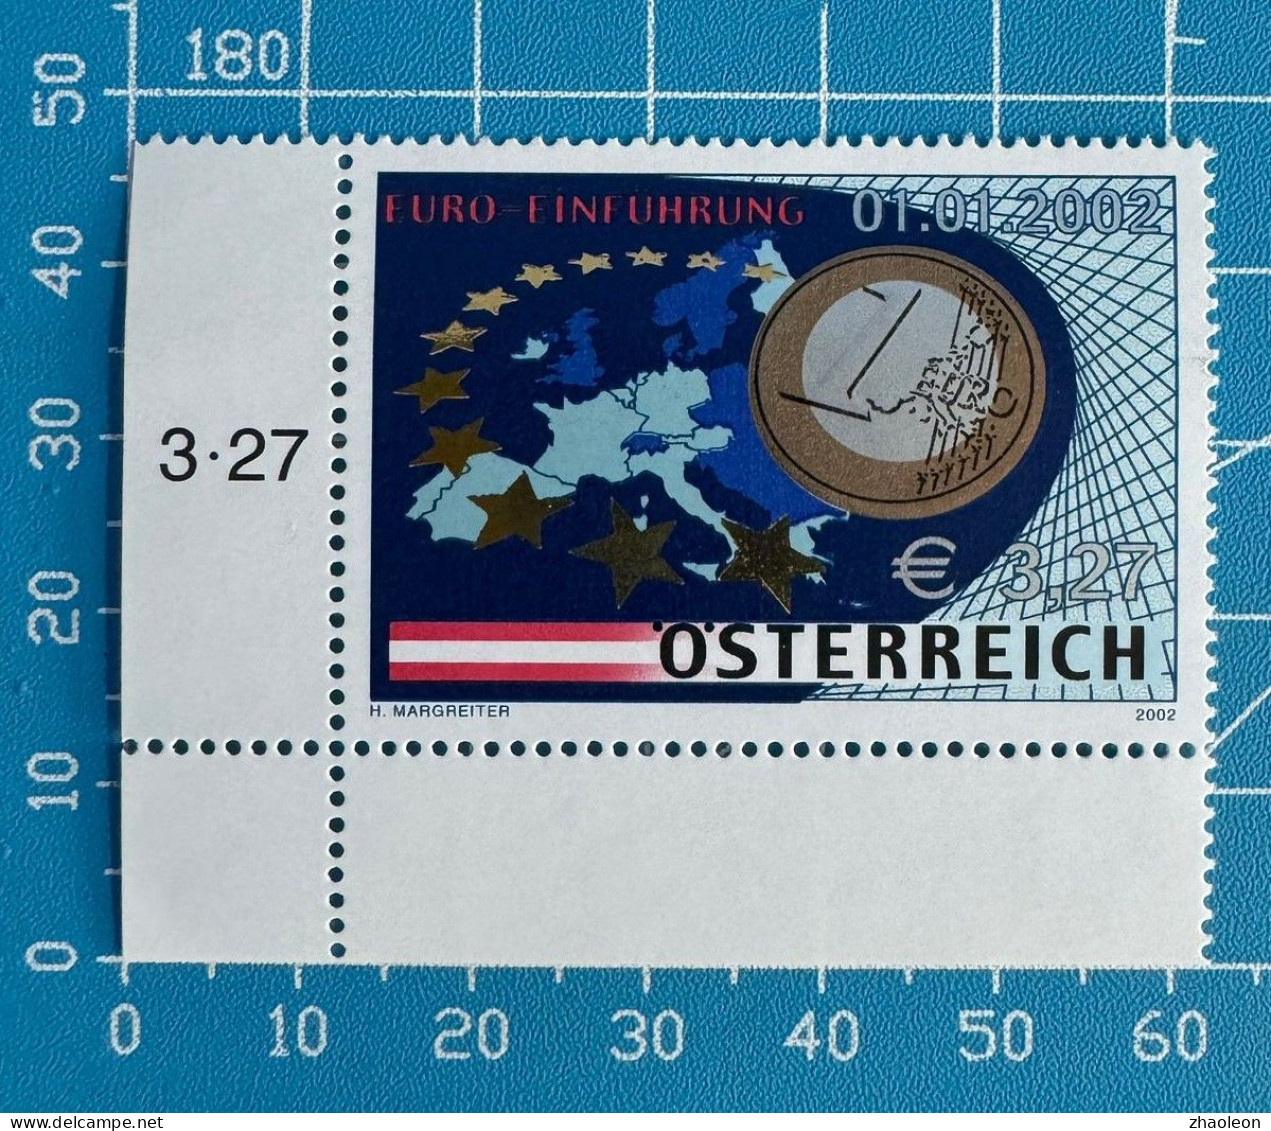 EURO-Einführung/ EURO Introduction Austria 2368 - Nuevos